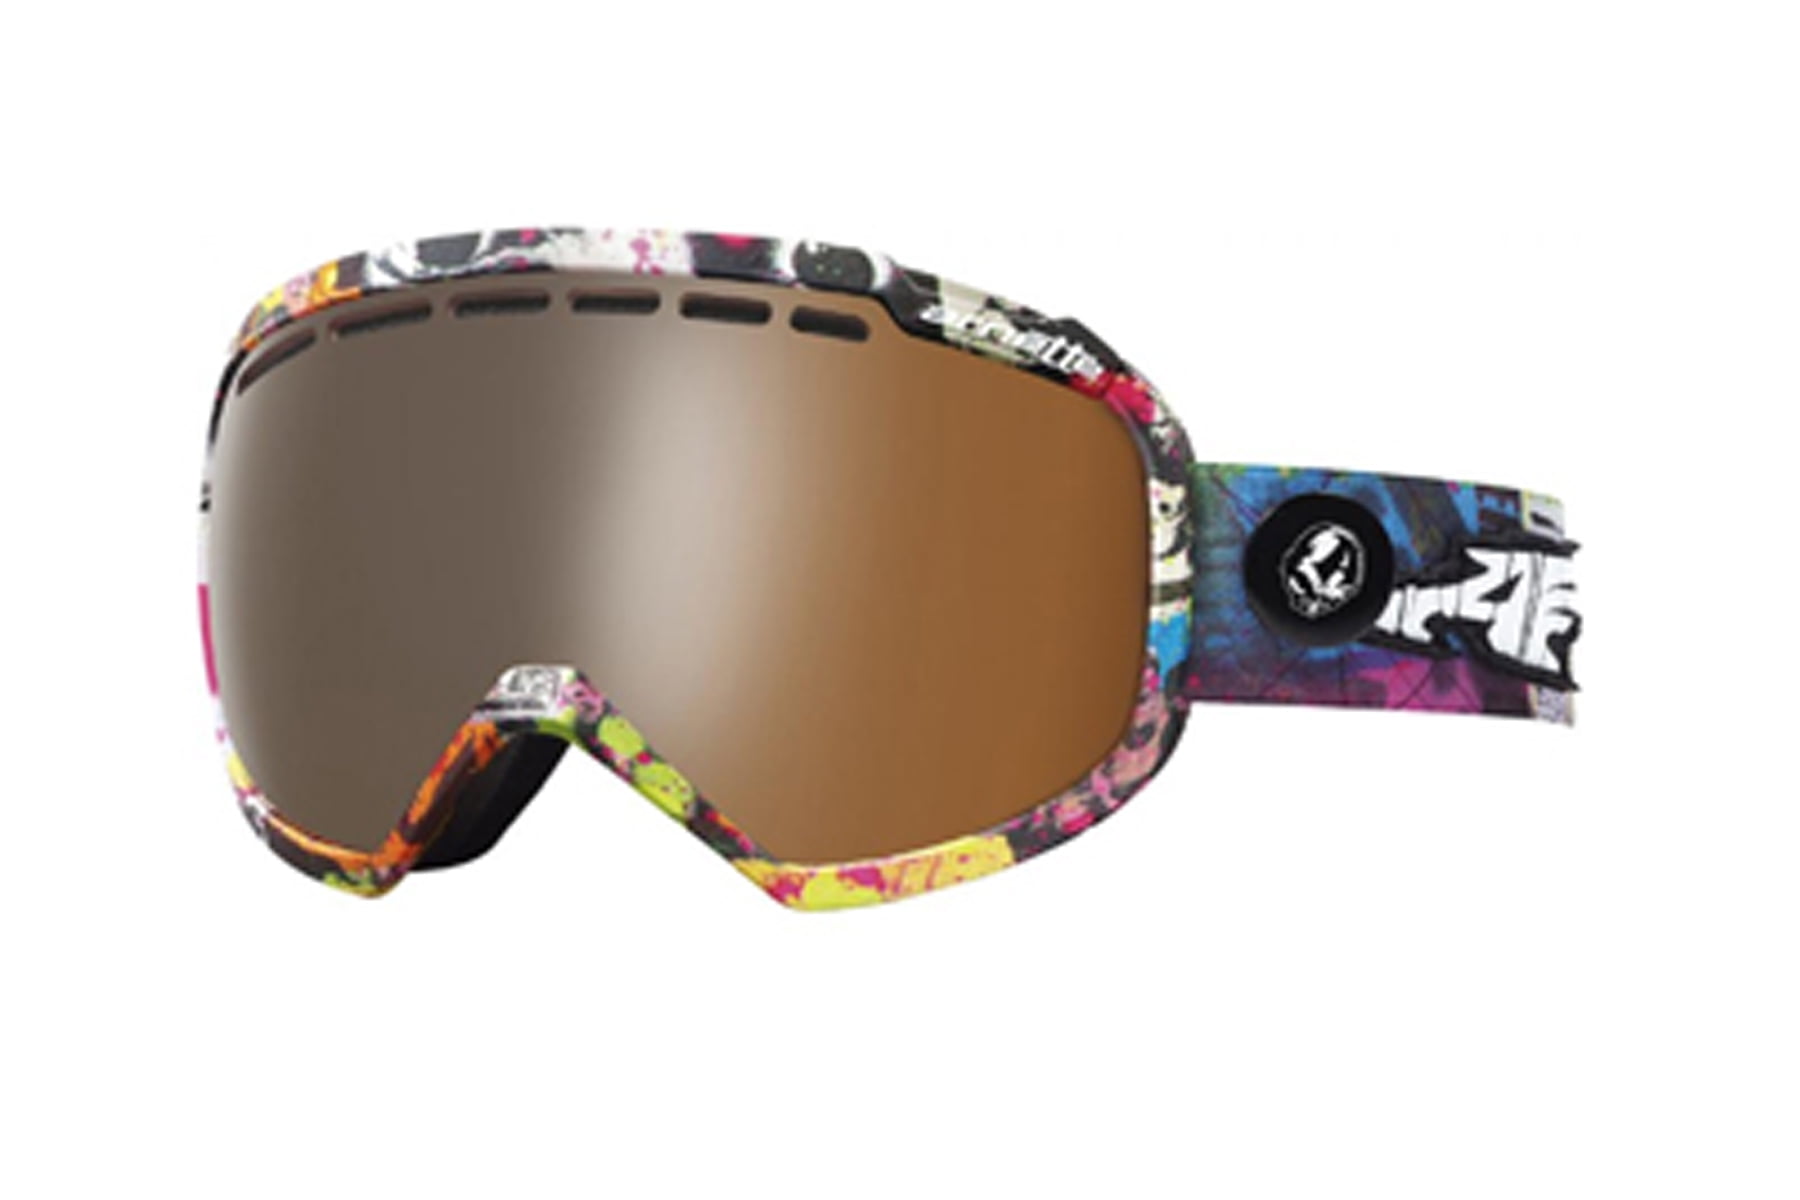 Arnette Skylight Snowboarding Goggles Ski AN5004 For Skiing Winter Snow Sports 